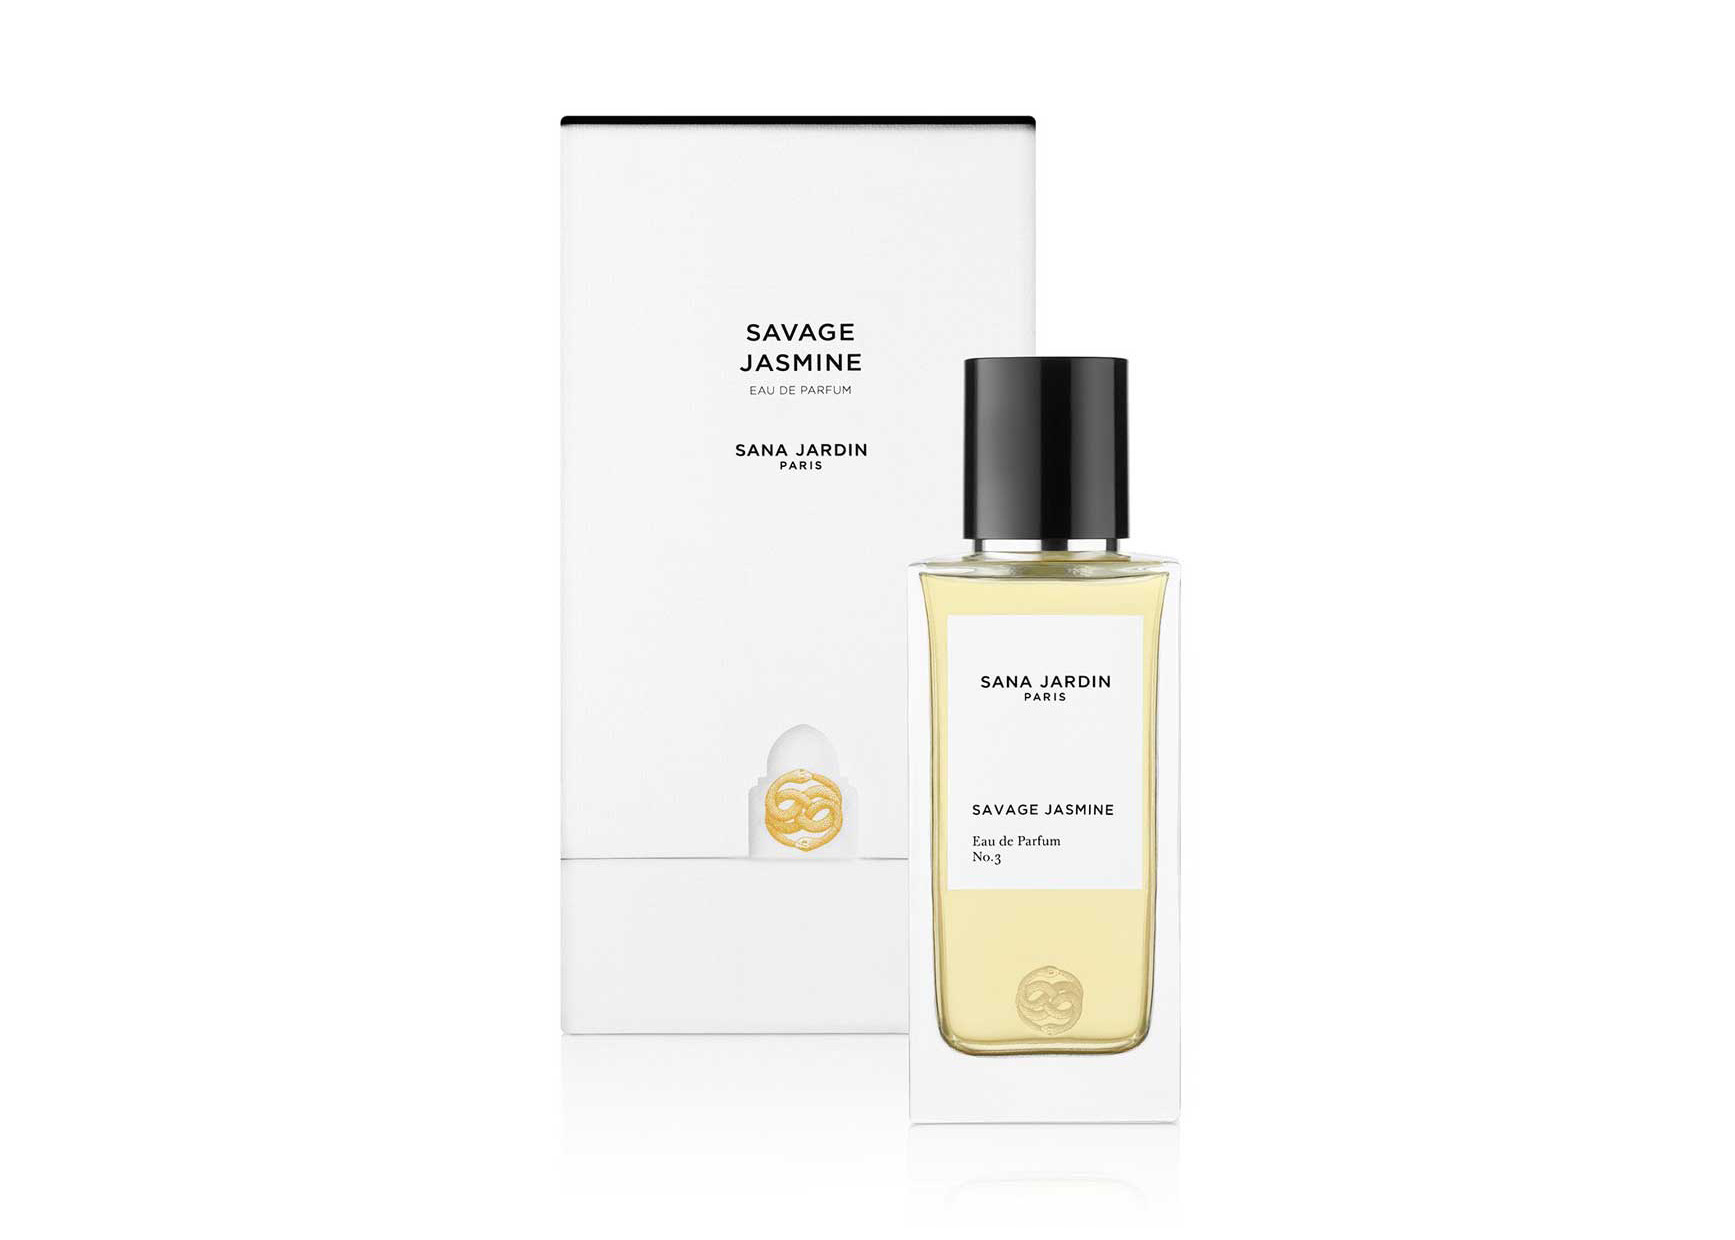 Perfume/frangrance from Sana Jardin